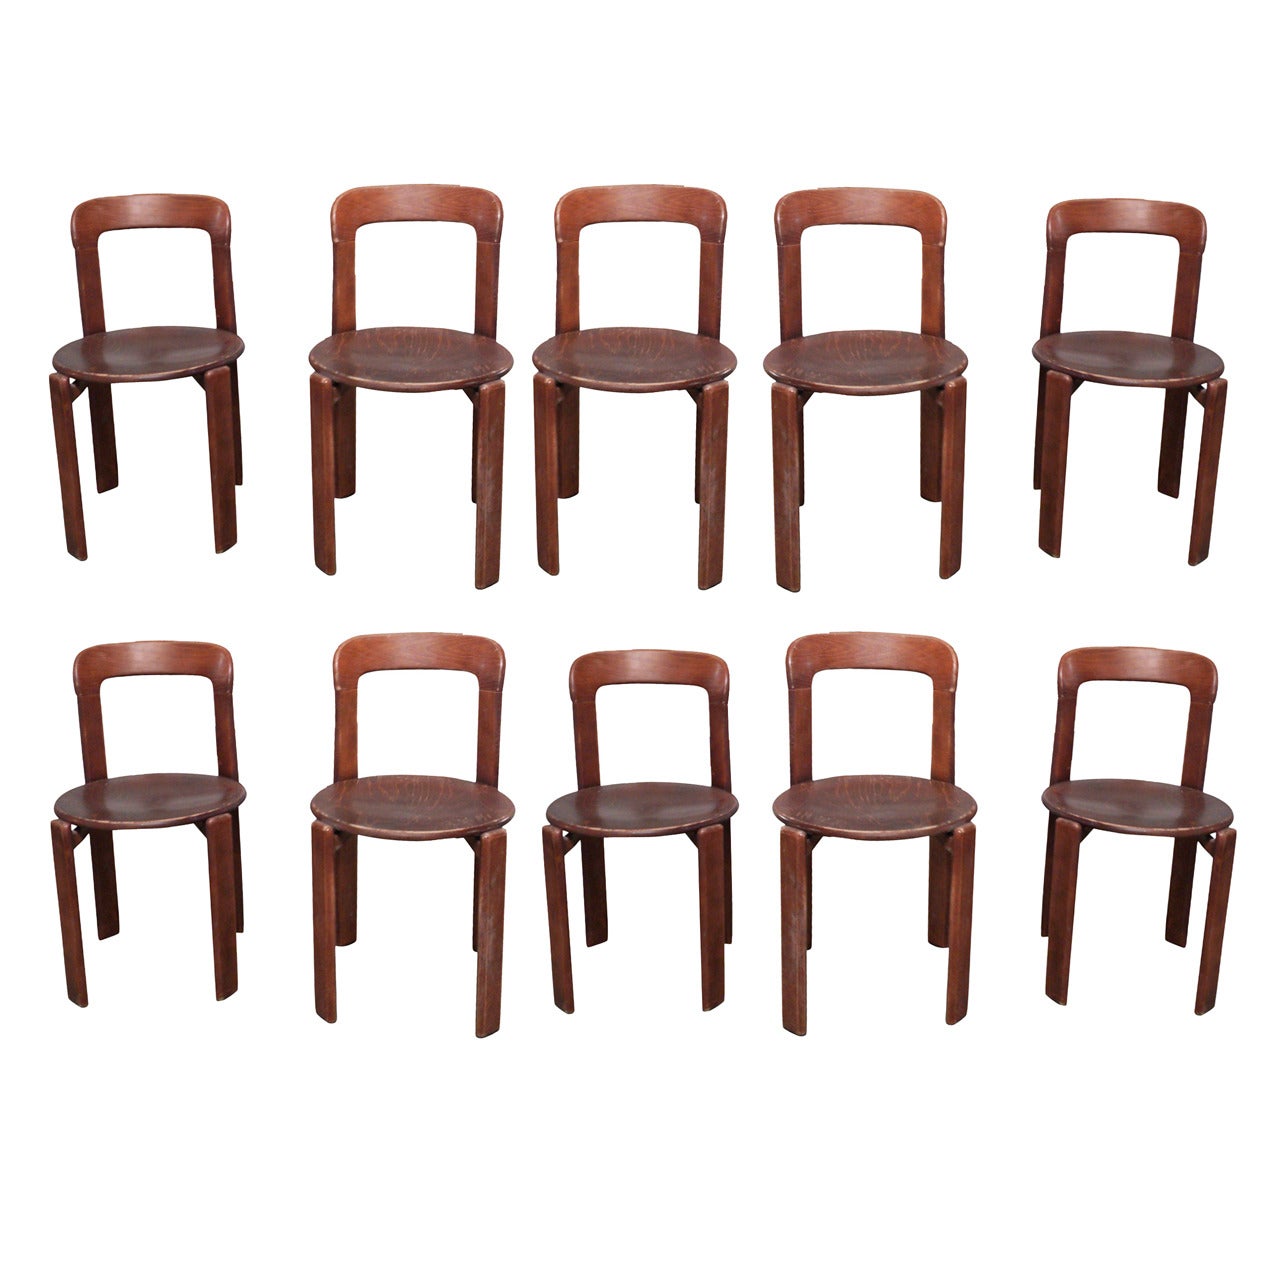 Set of 10 Bruno Rey 1970s Chairs - Switzerland early 1970's - Ipso Facto